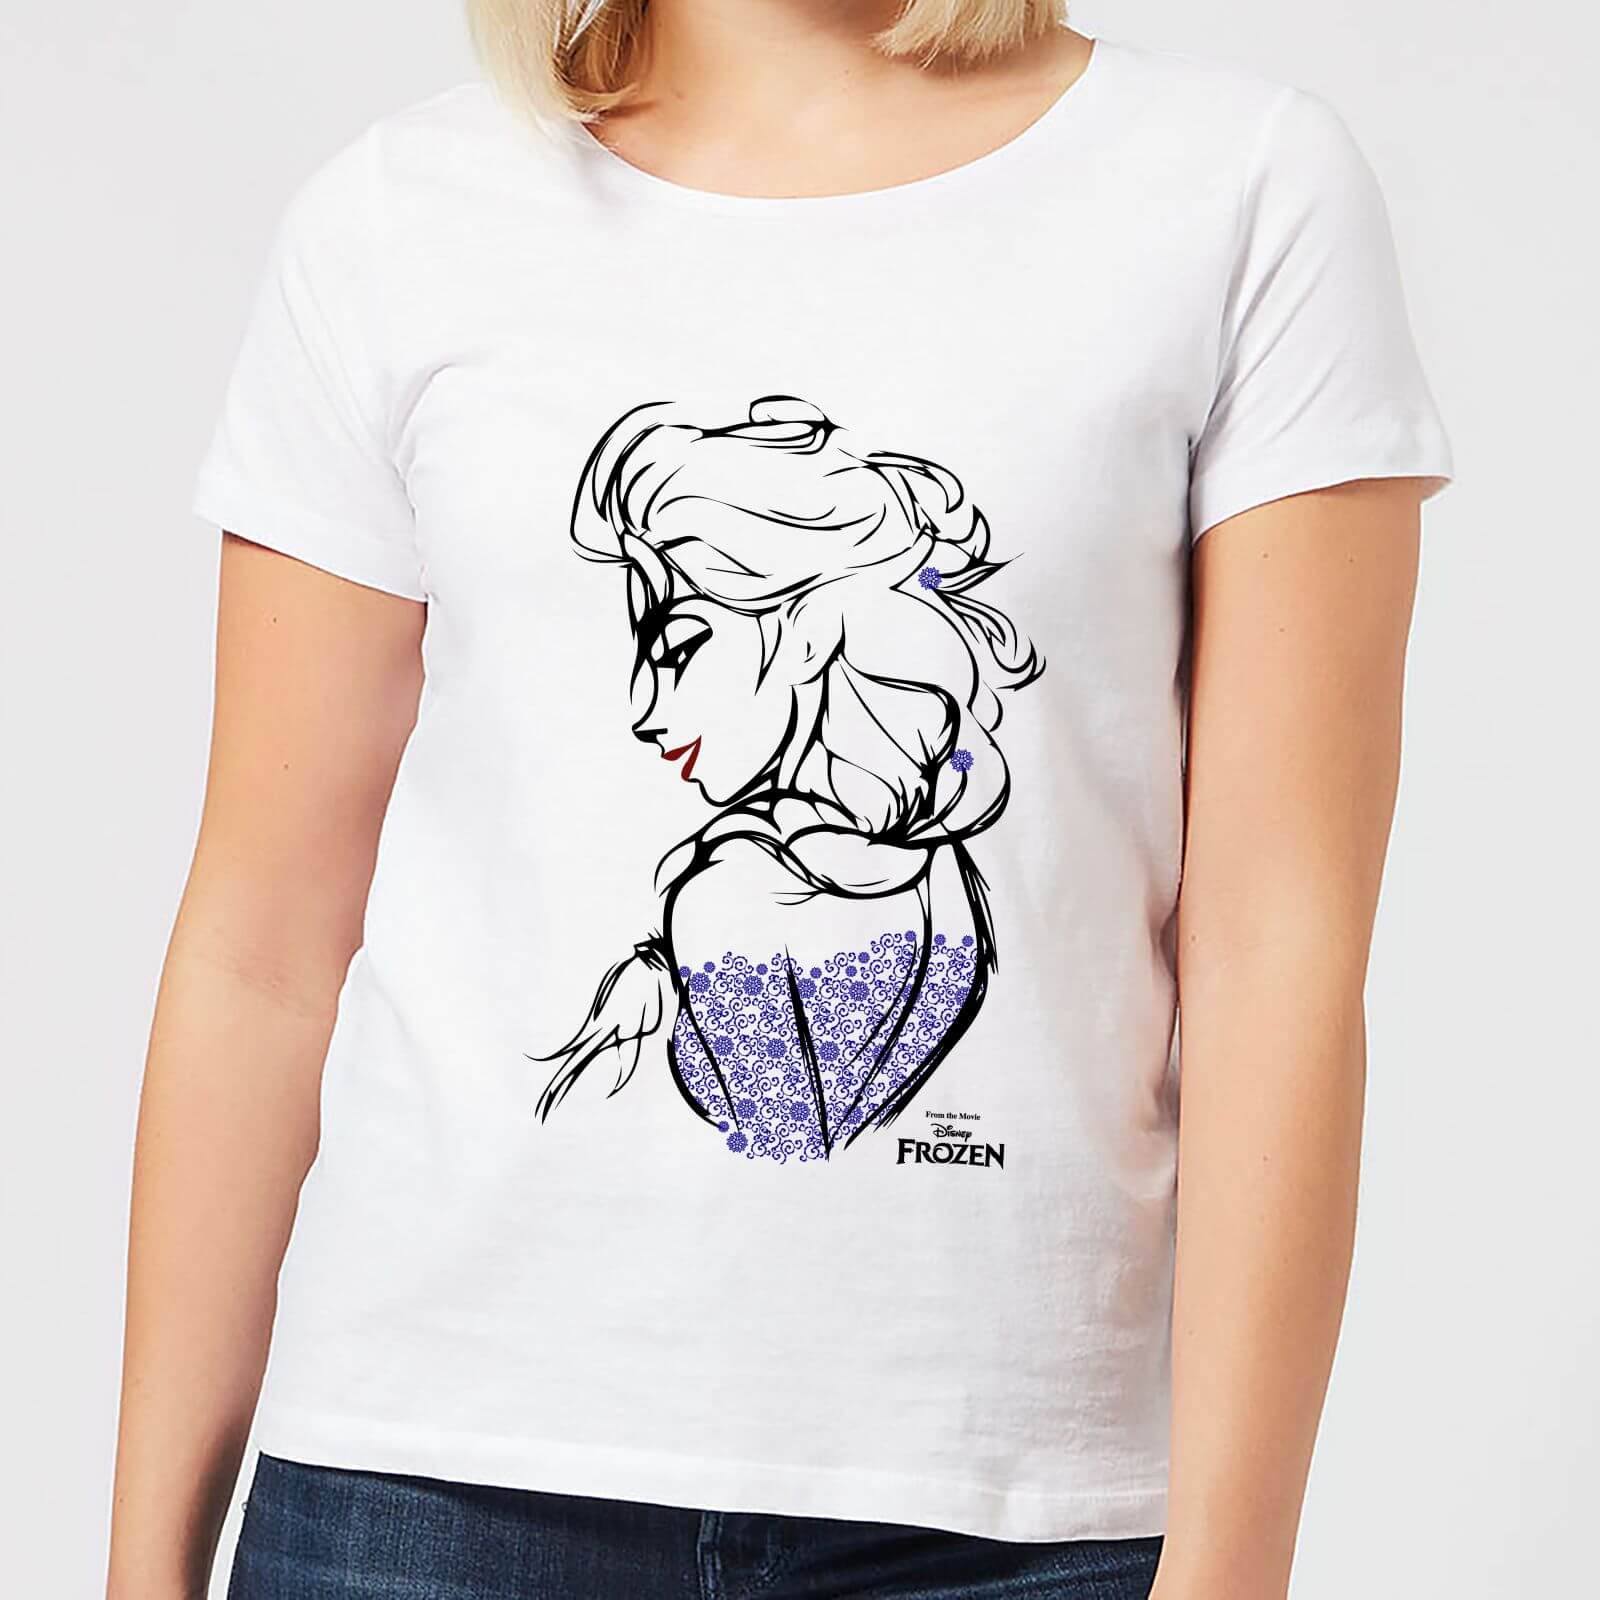 Disney Frozen Elsa Sketch Women's T-Shirt - White - S